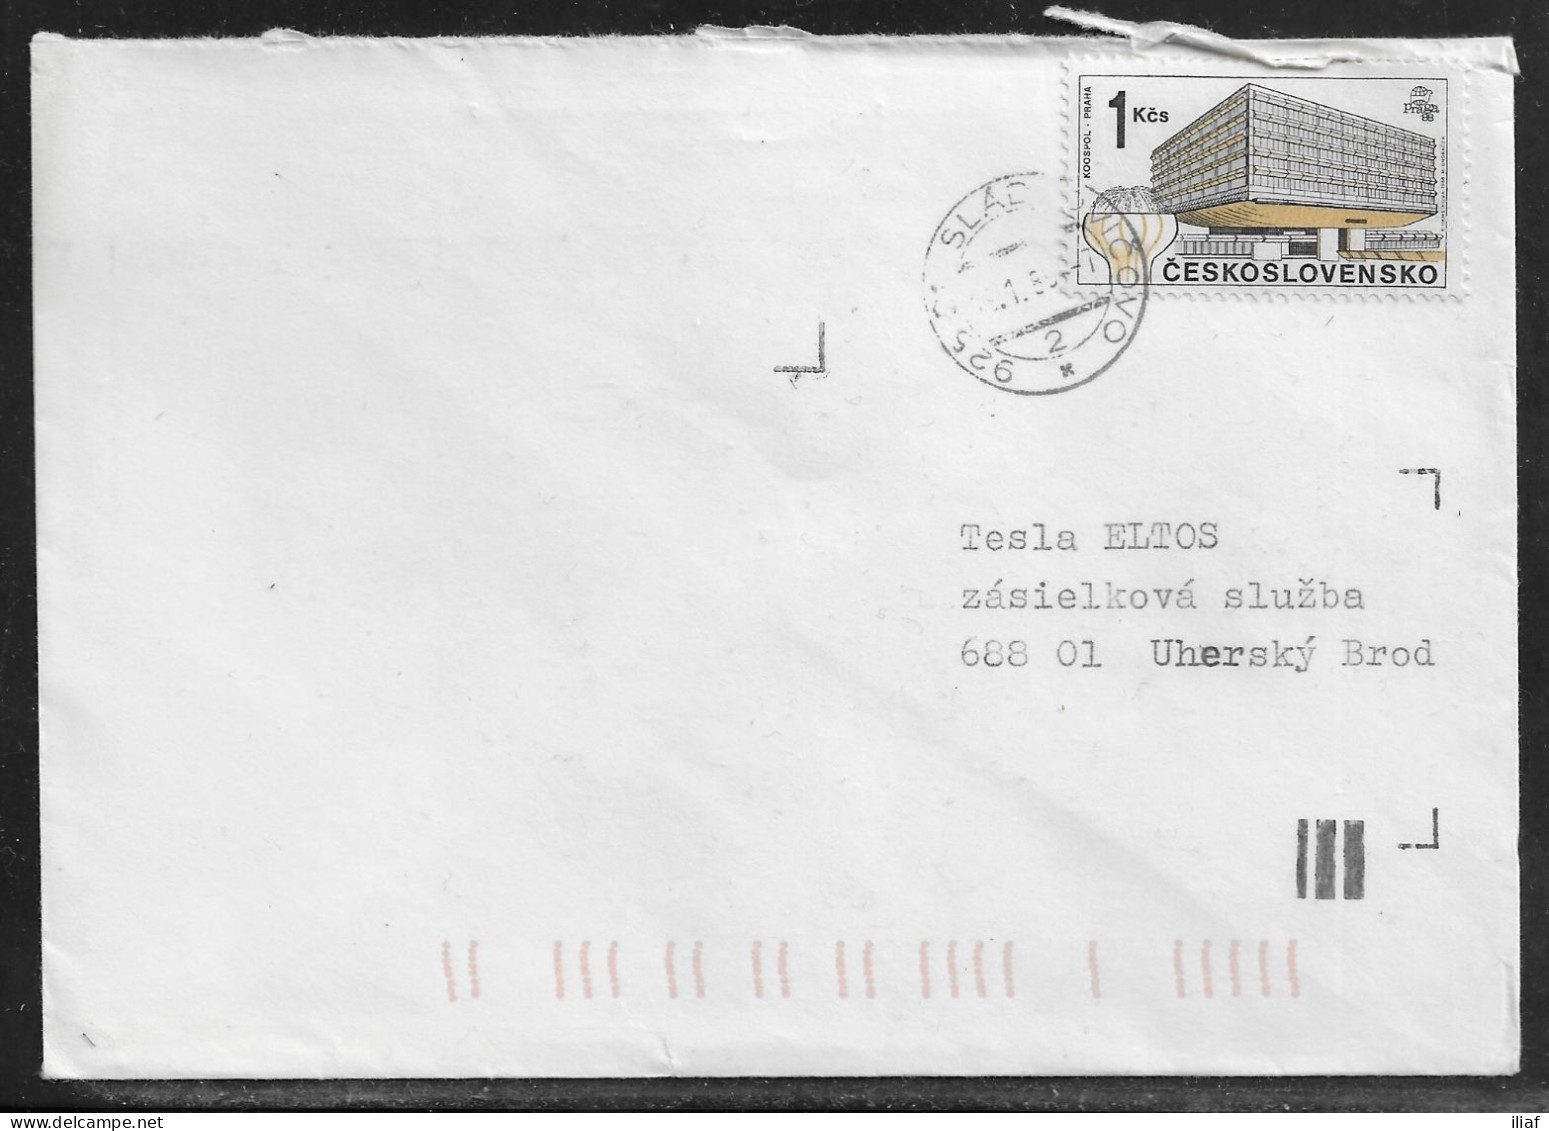 Czechoslovakia. Stamp Sc. 2711 On Letter, Sent From Sladkovicovo 18.01.89 For “Tesla” Uhersky Brod. - Covers & Documents